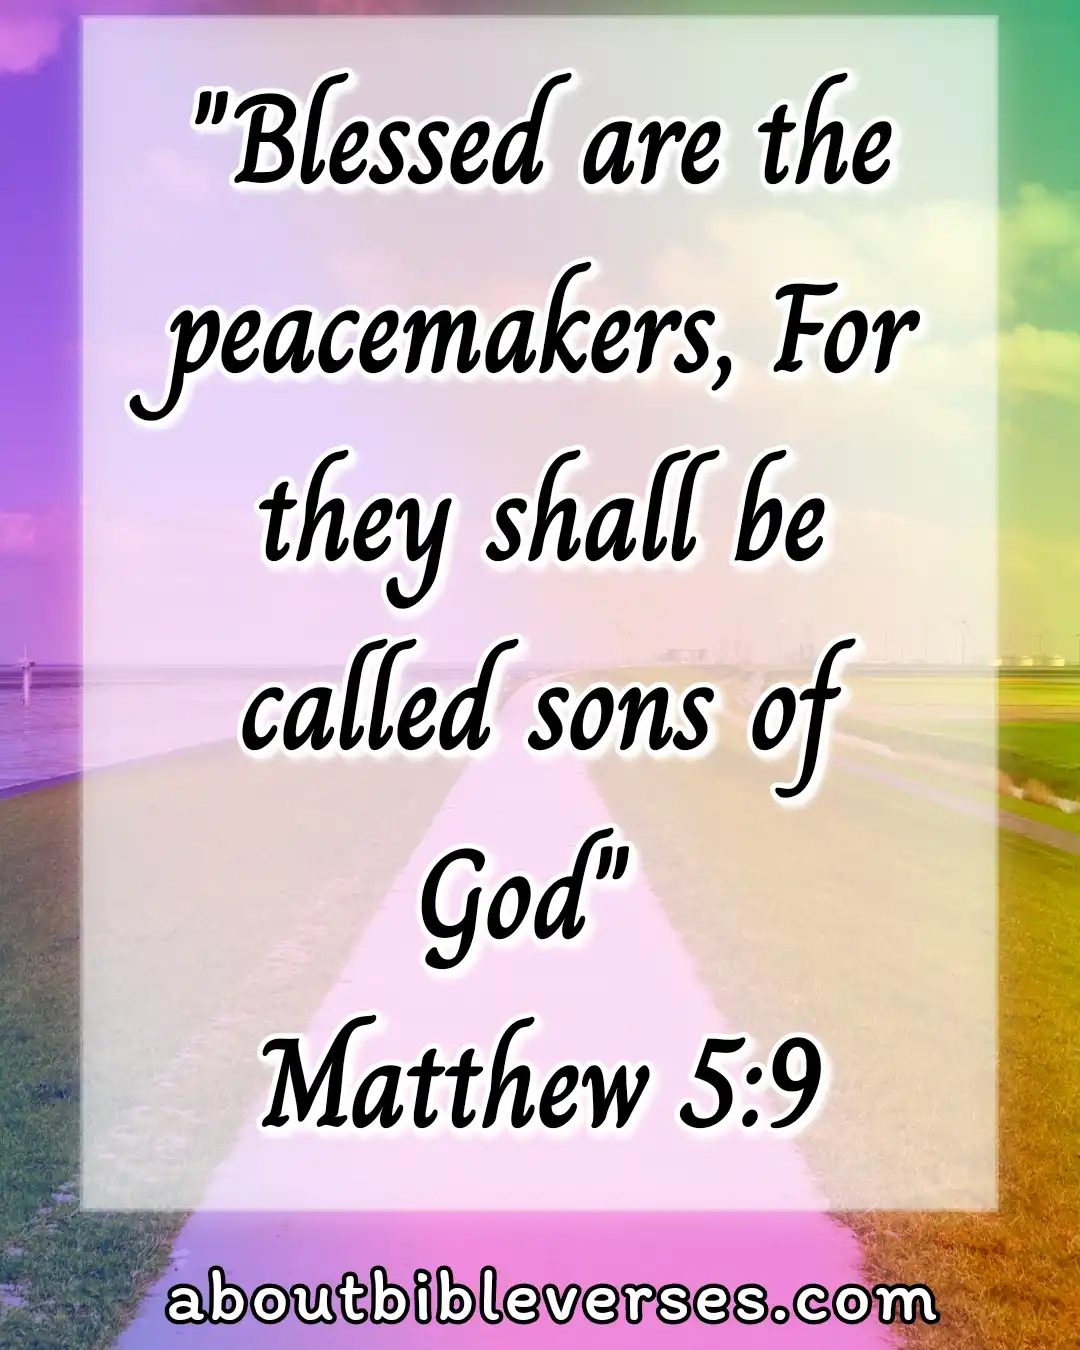 God Blessed Us (Matthew 5:9)